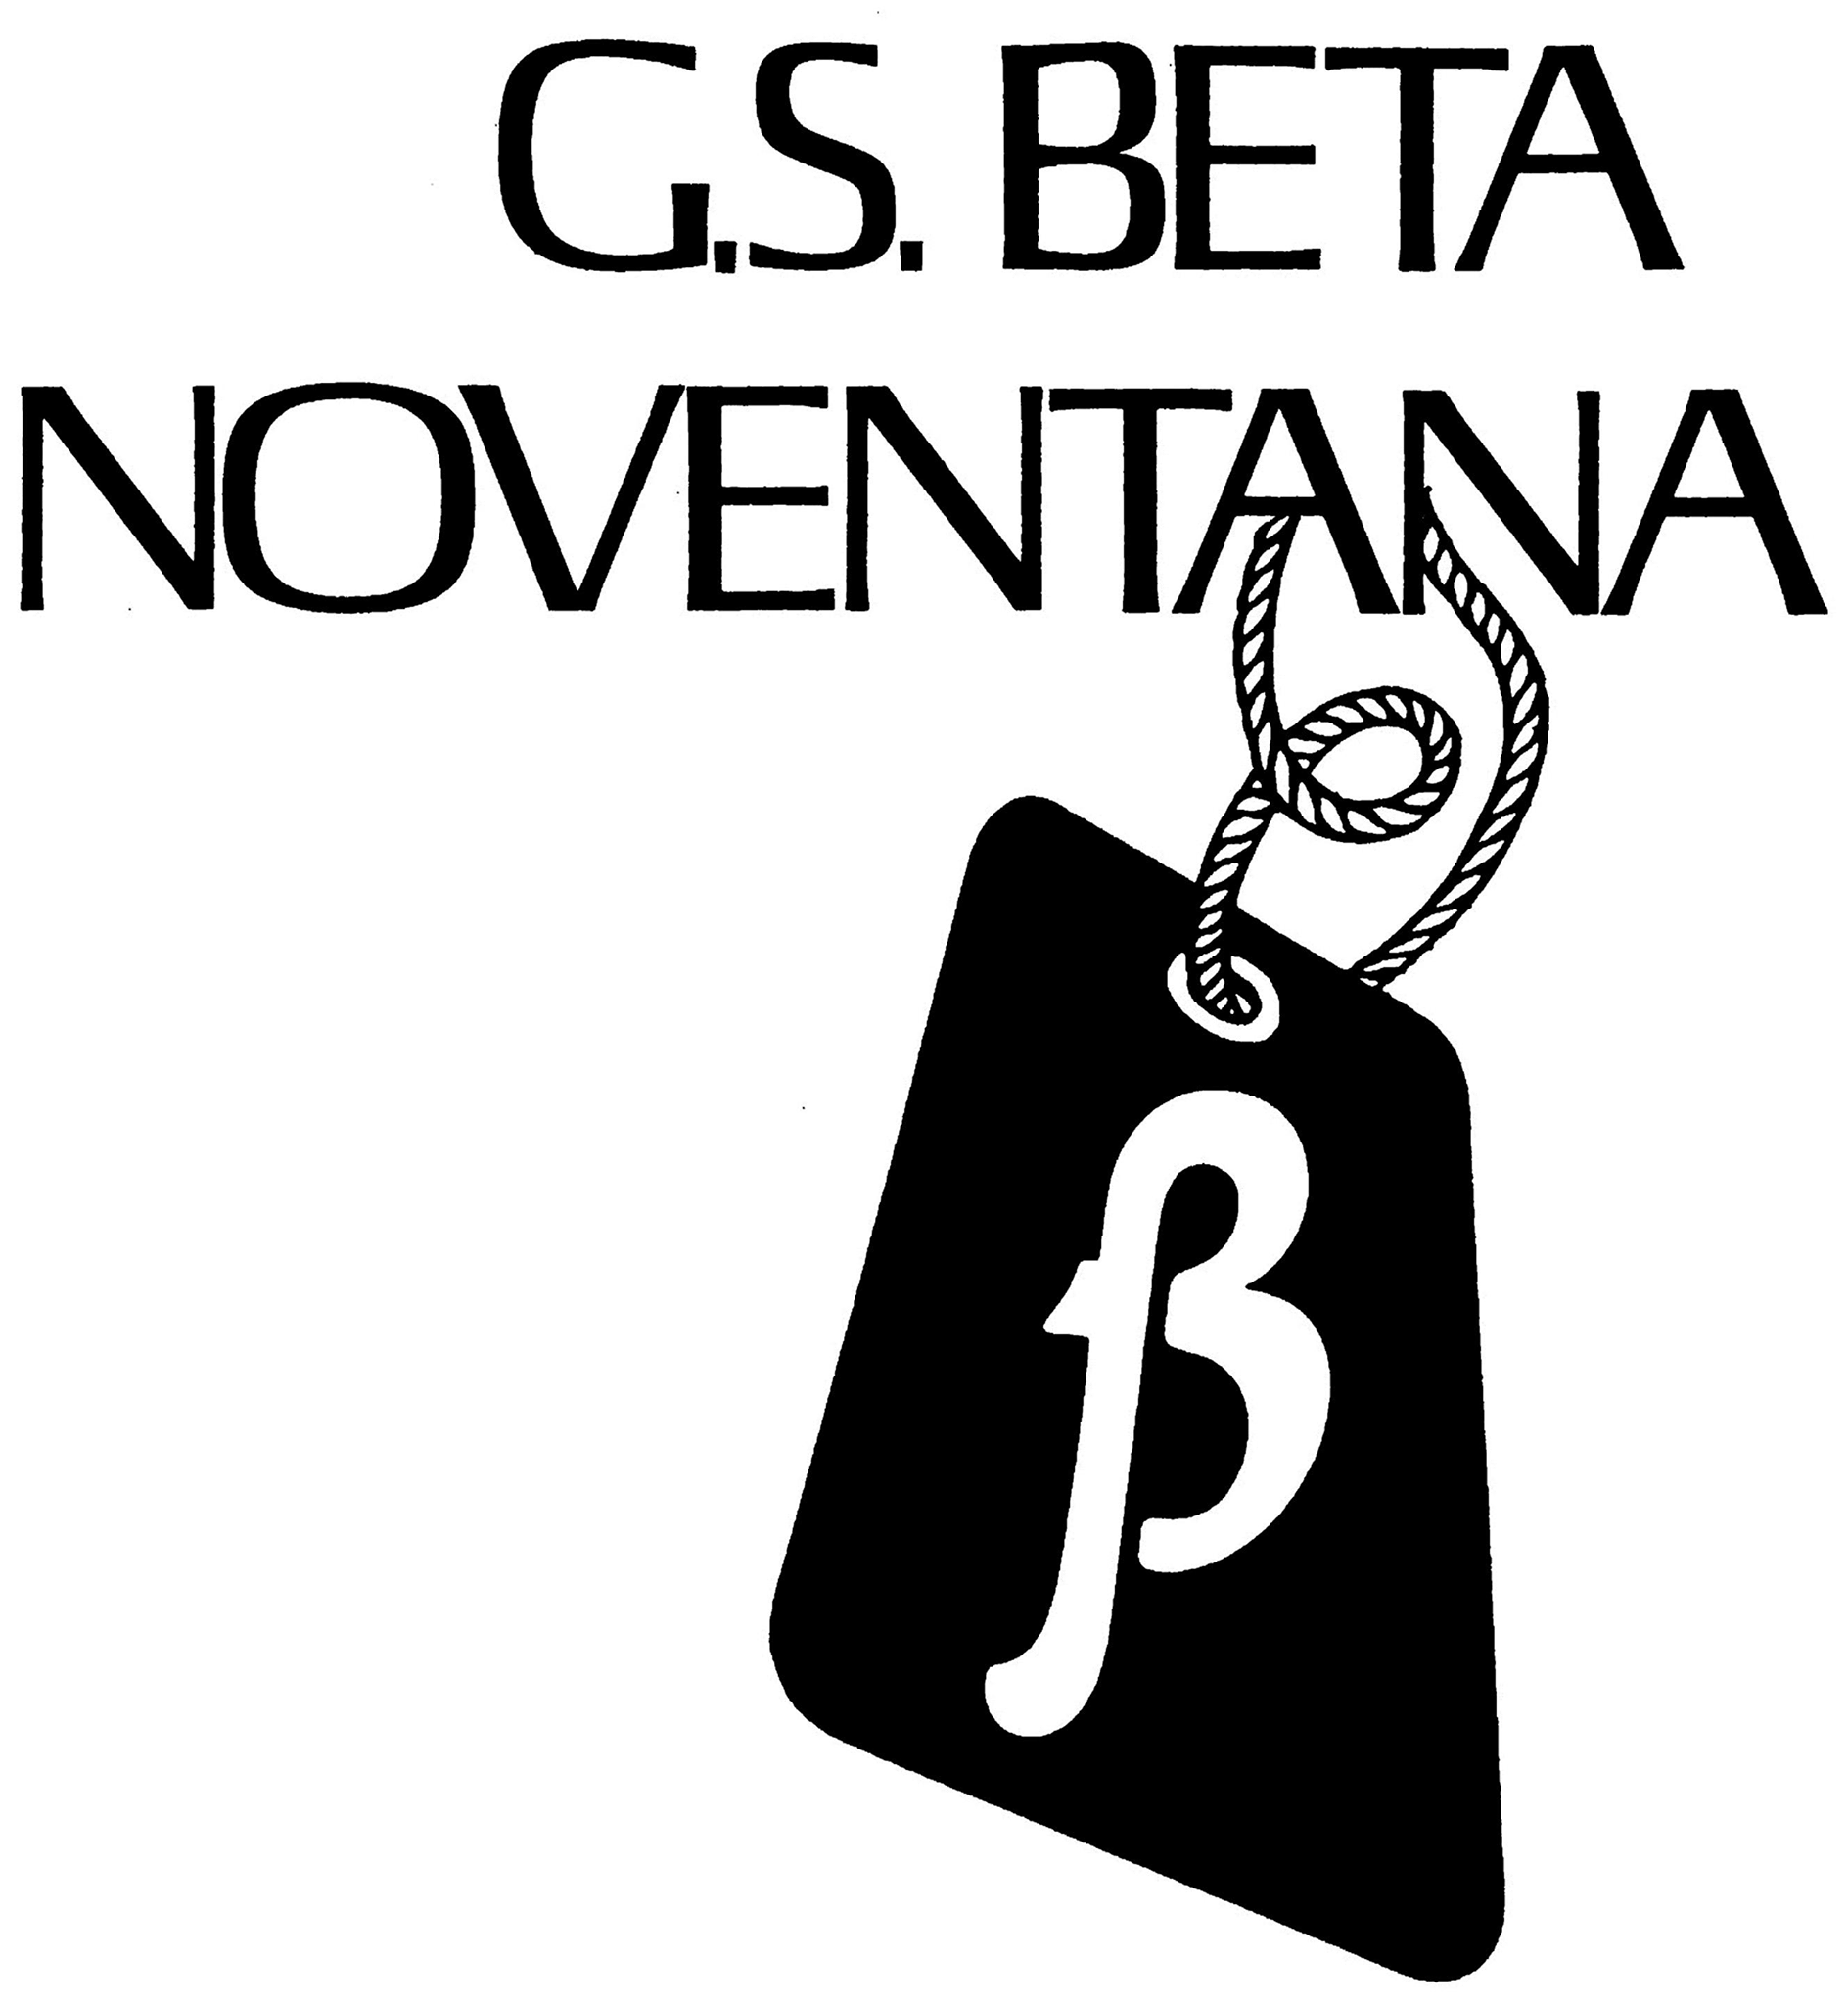 G.S. Beta Noventa Padovana